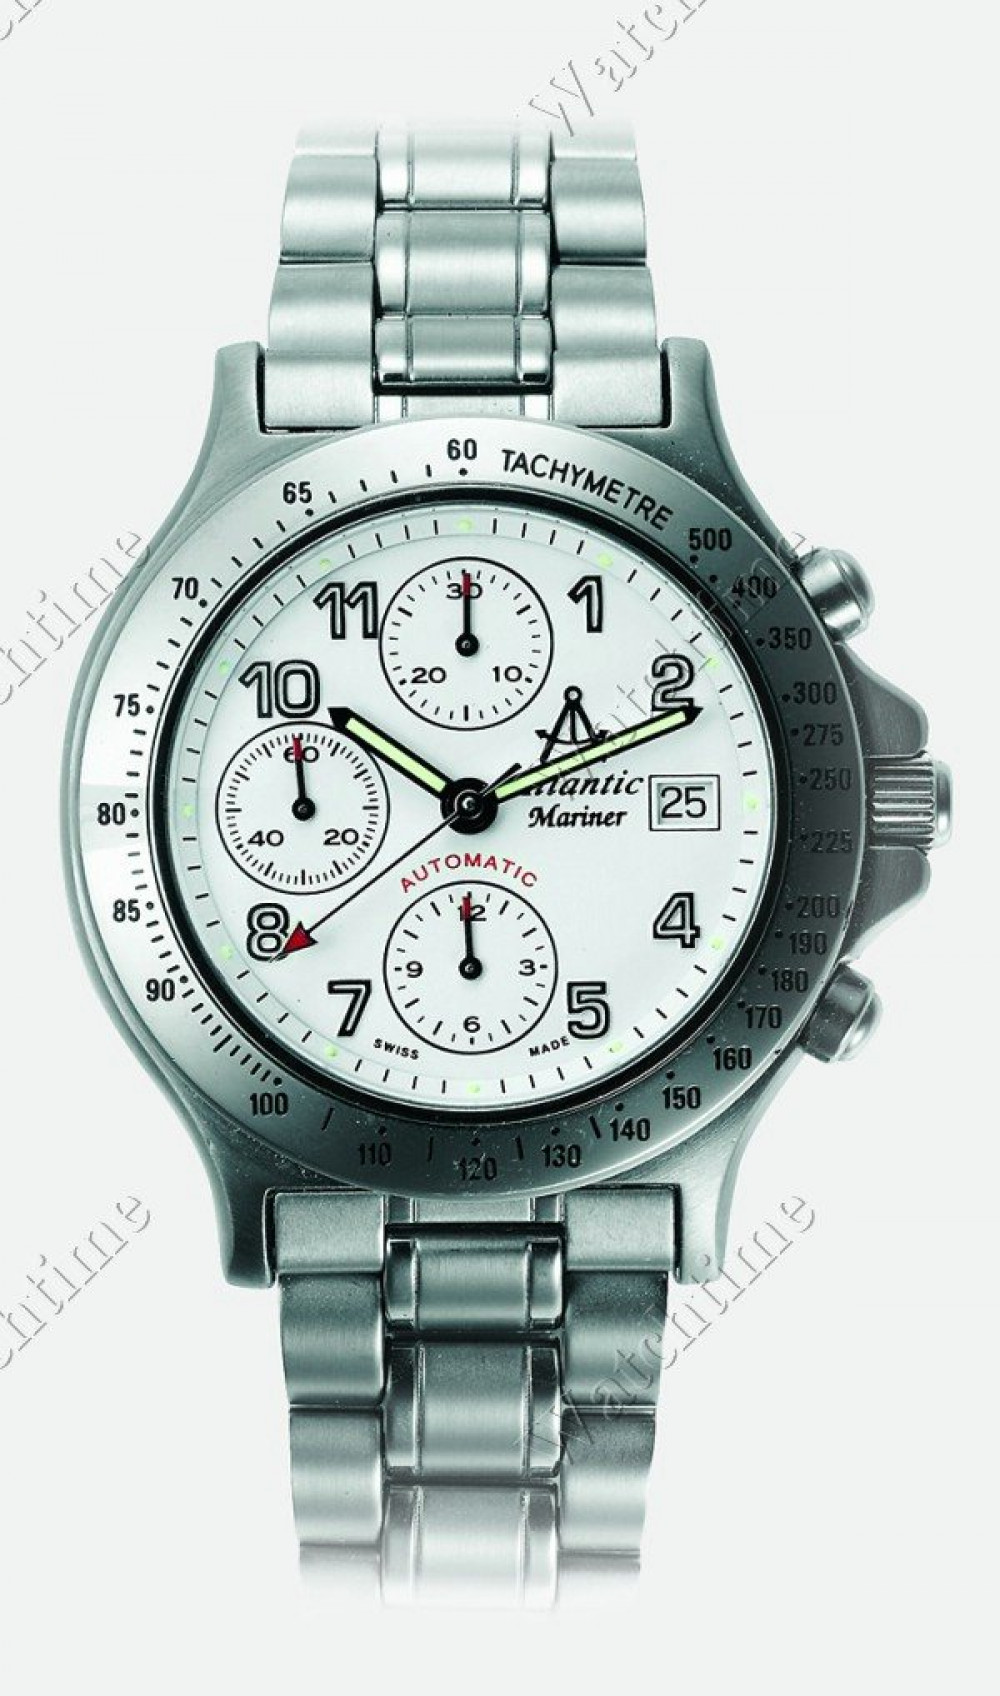 Zegarek firmy Atlantic, model Mariner Automatik Chrono